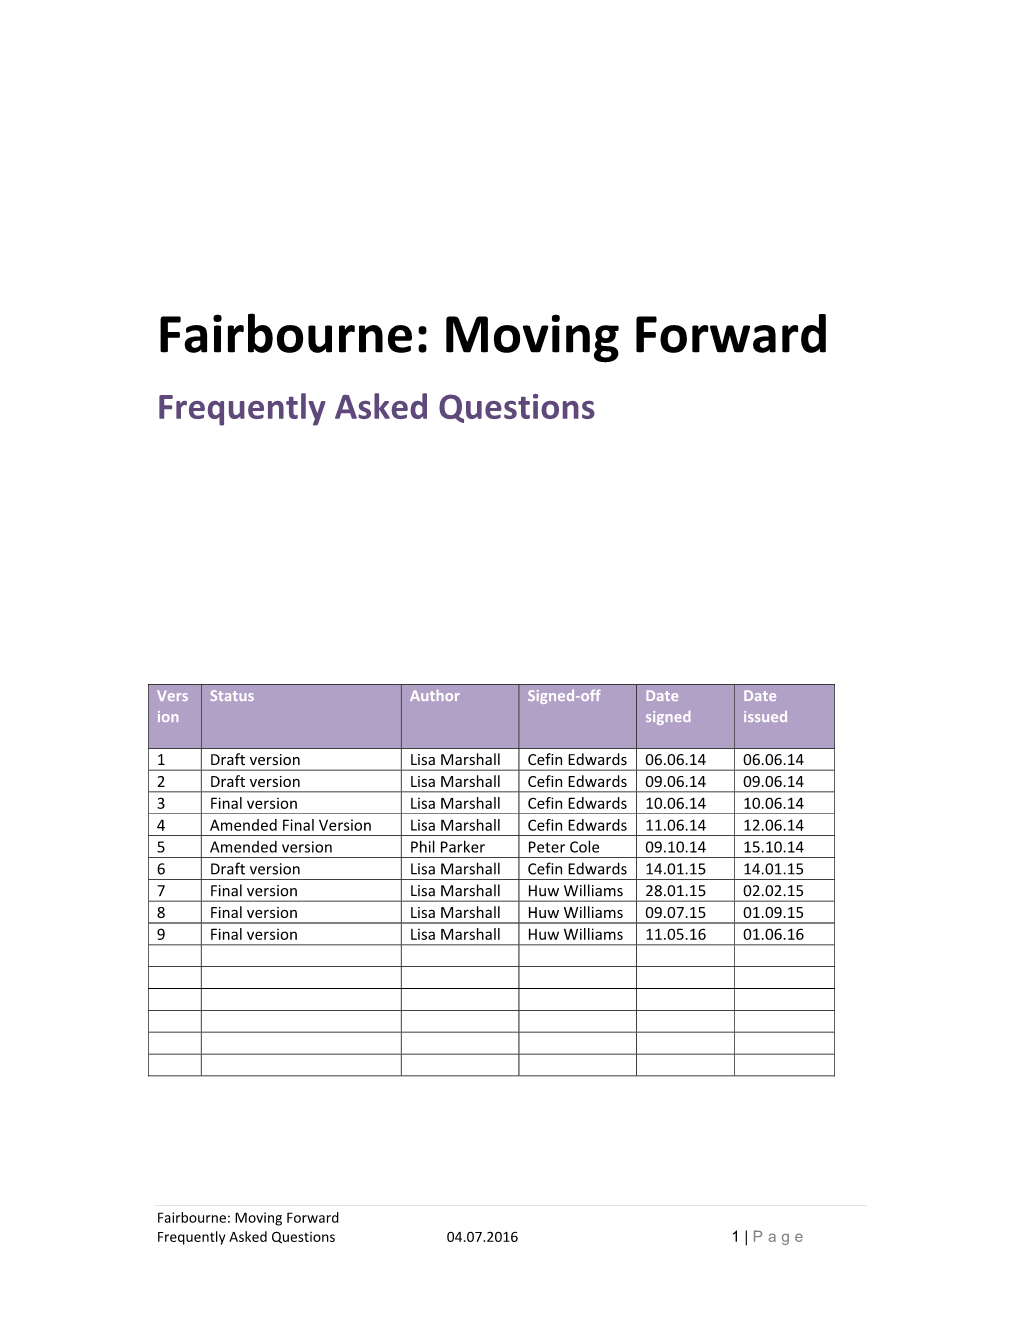 Fairbourne Moving Forward